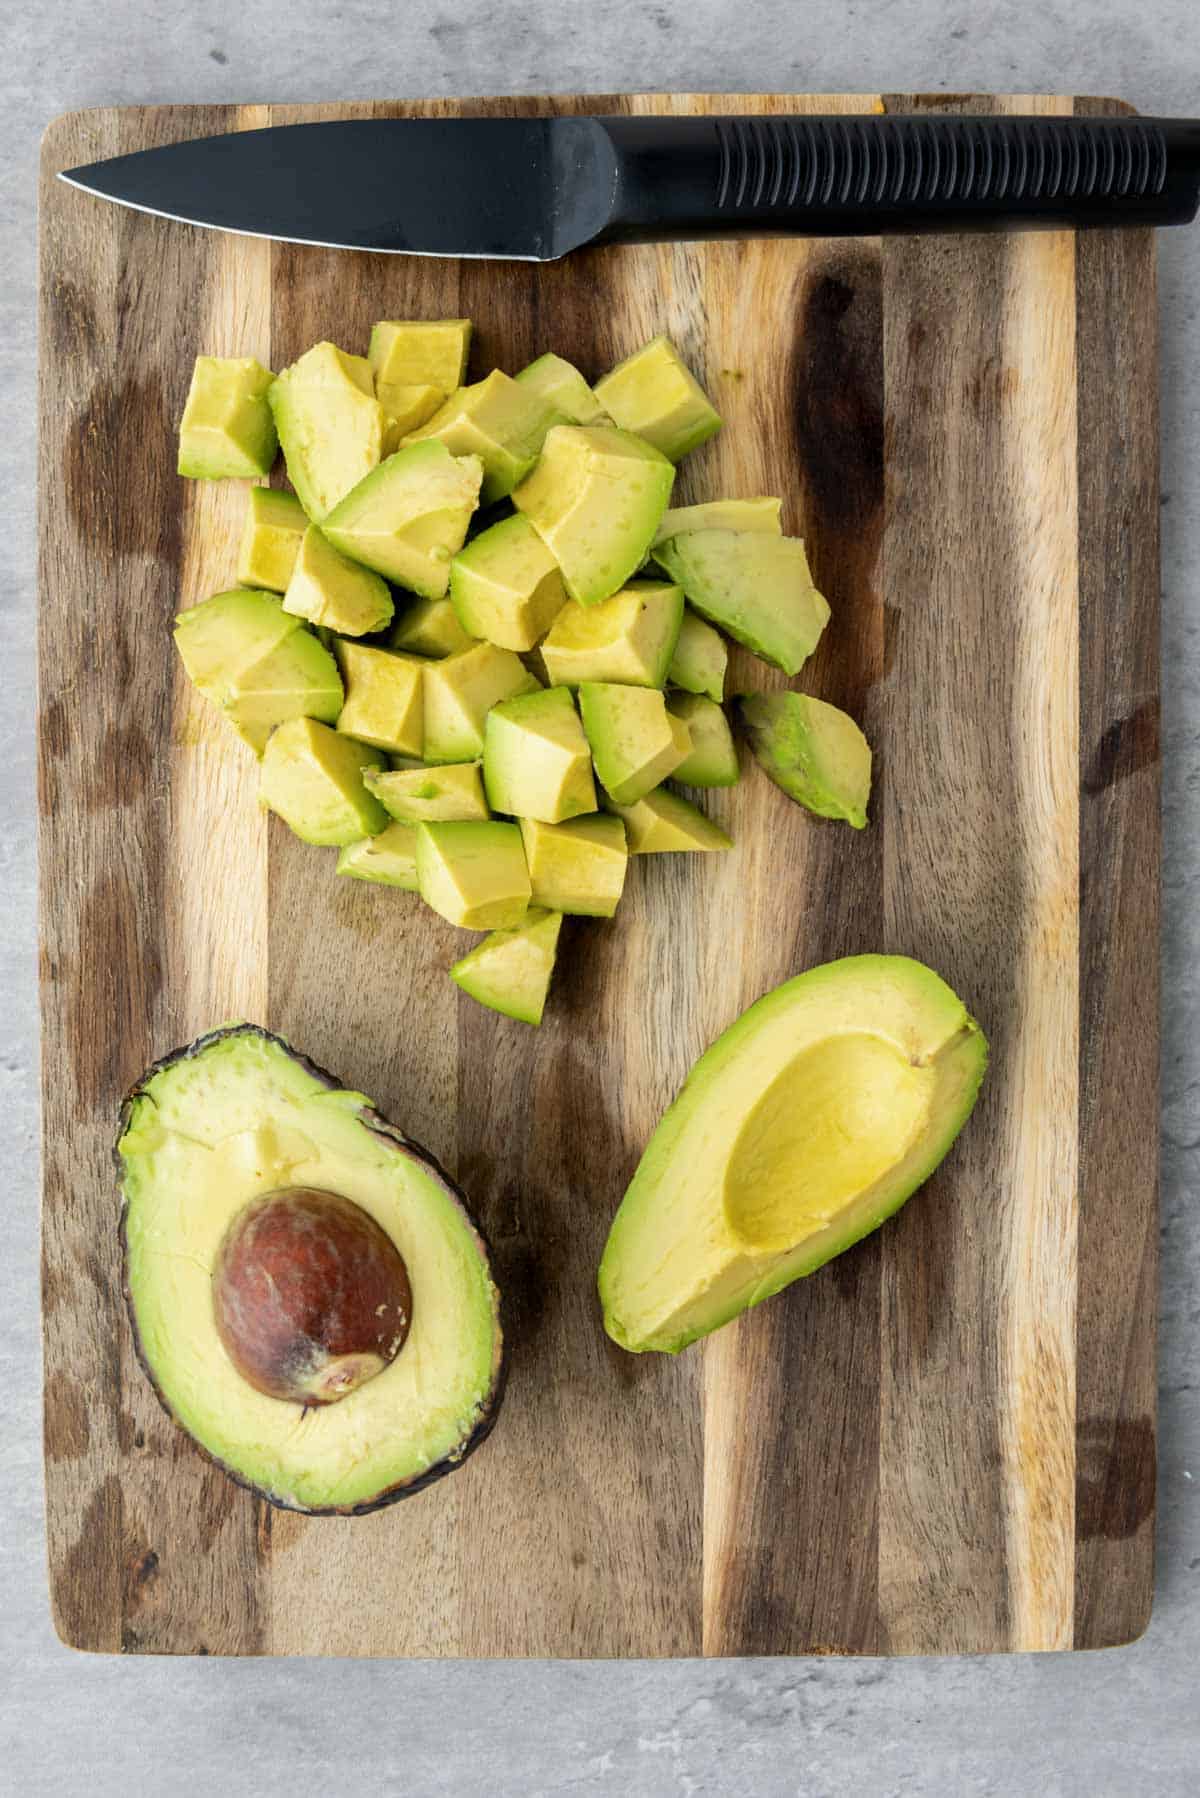 Cutting avocado into chunks for salad.